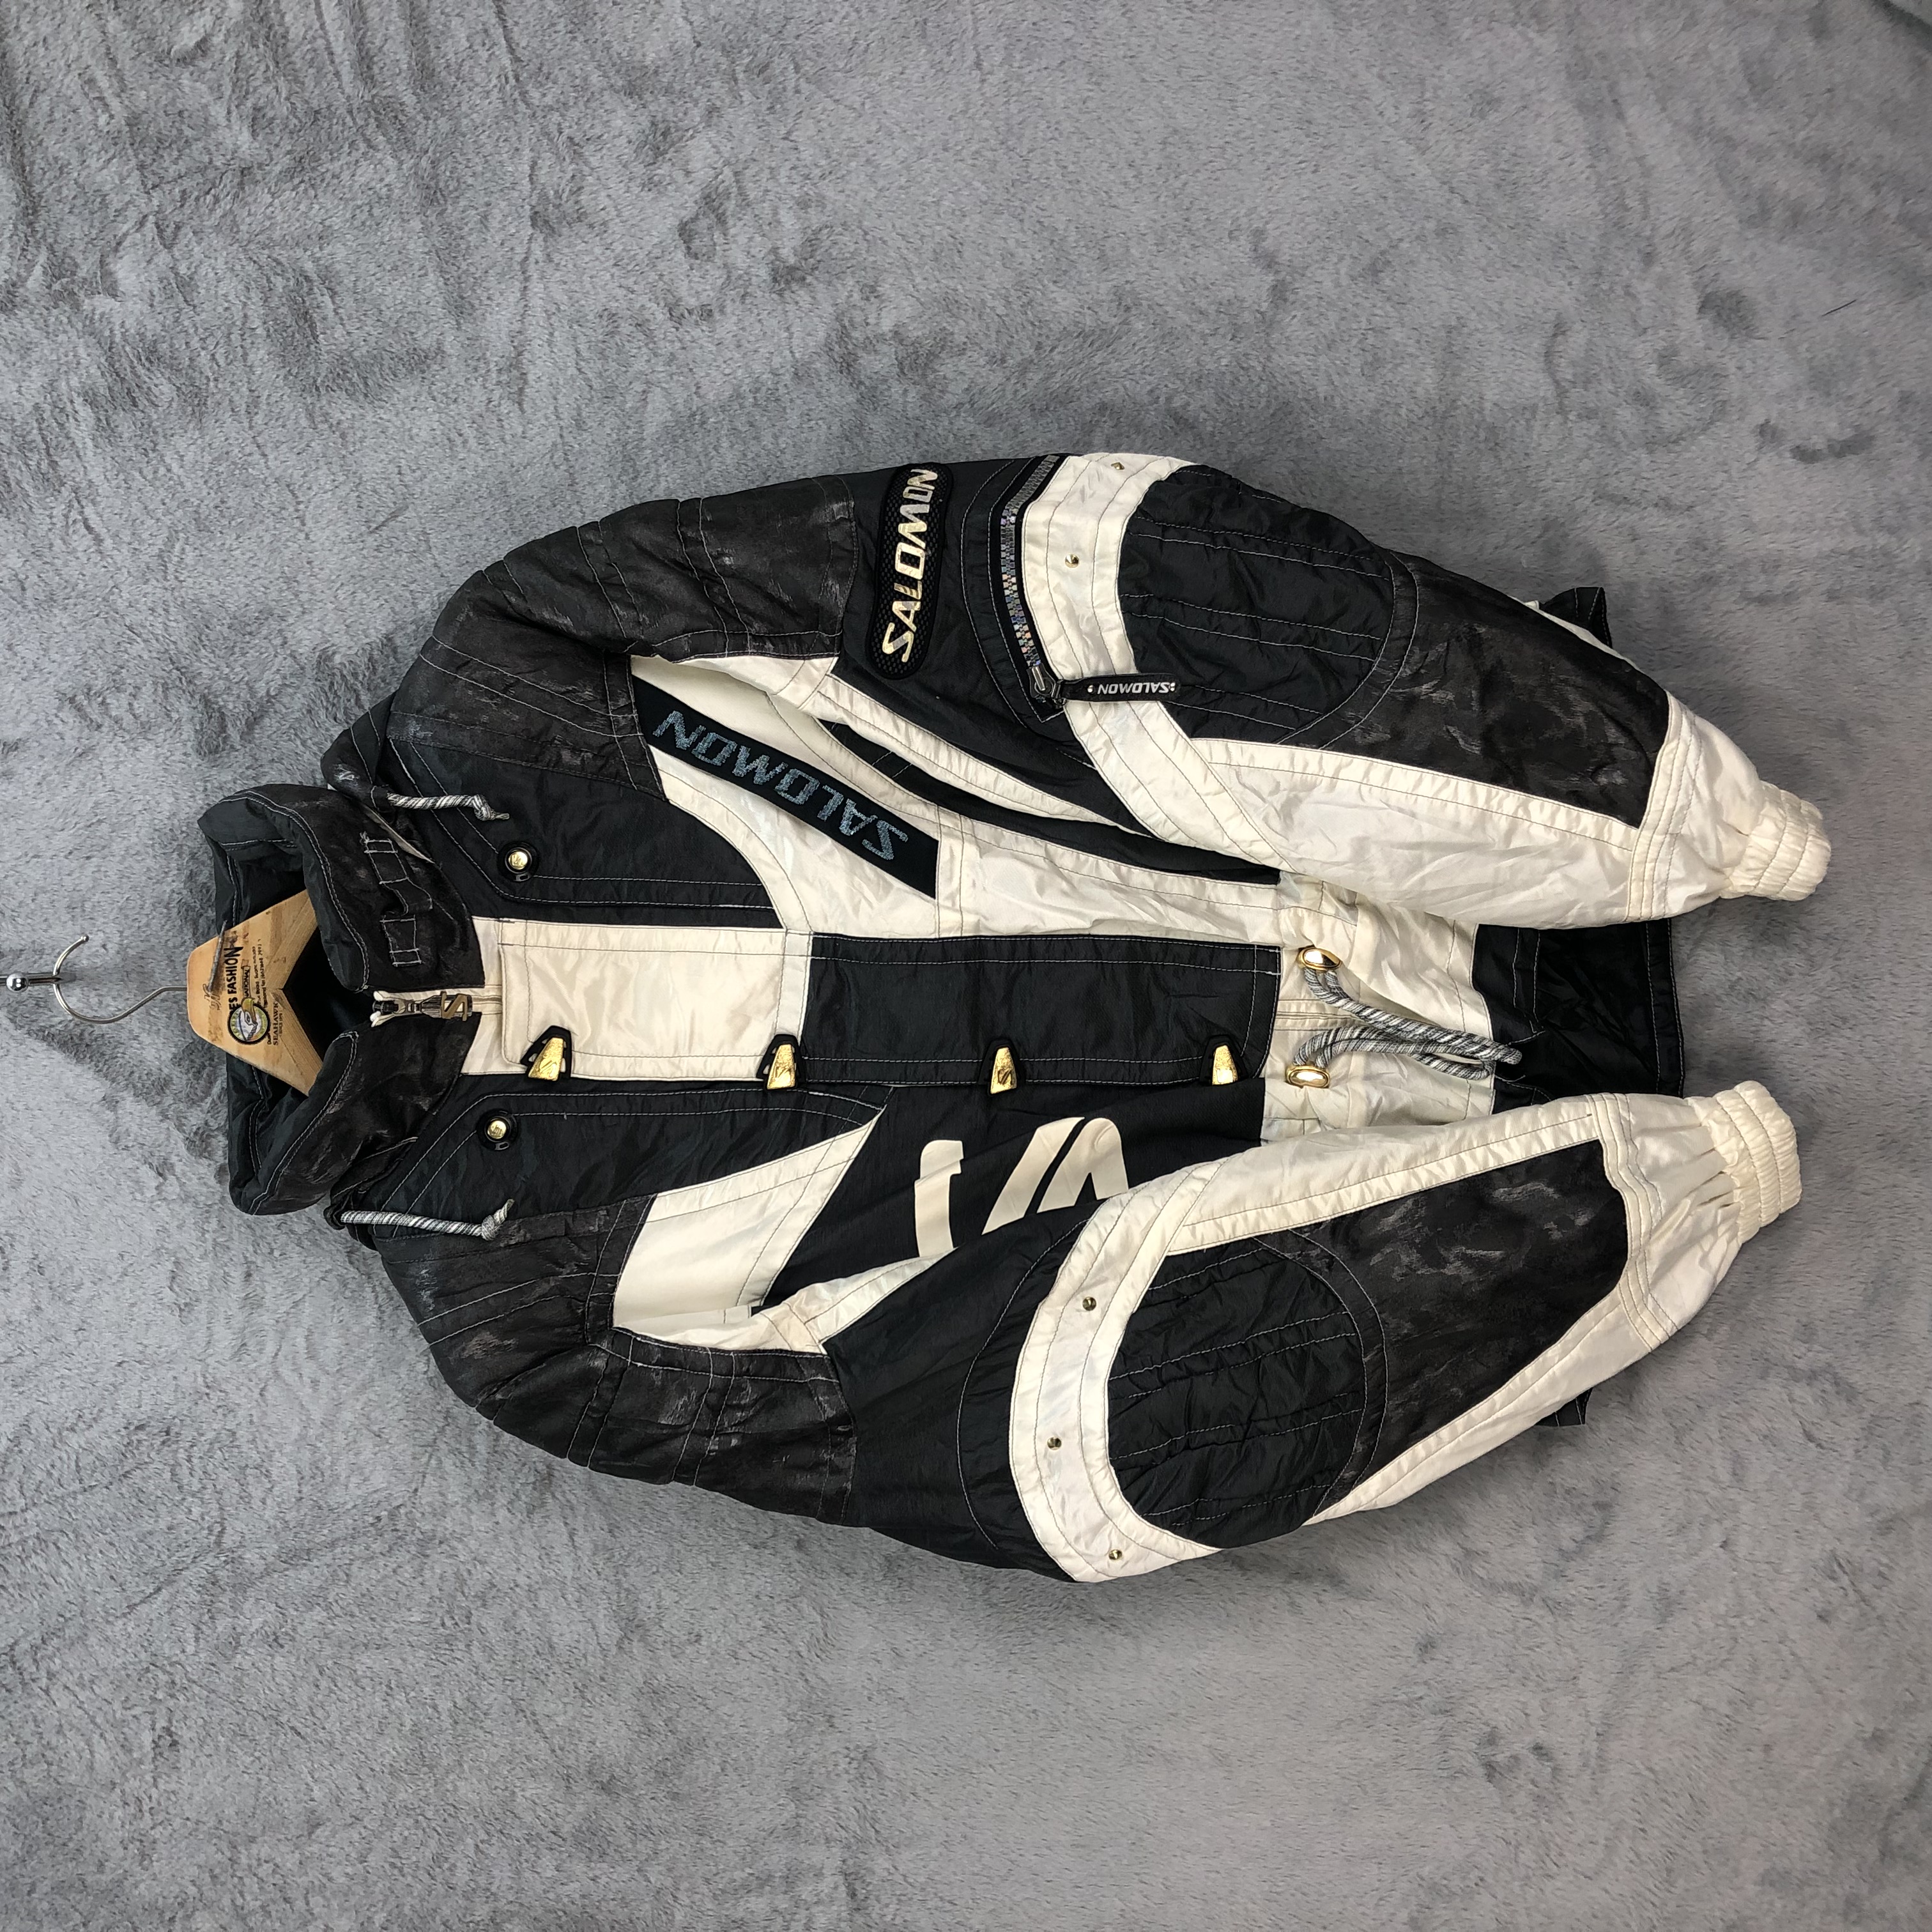 SALOMON Hooded Ski Jacket Skiwear #5164-177 - 9